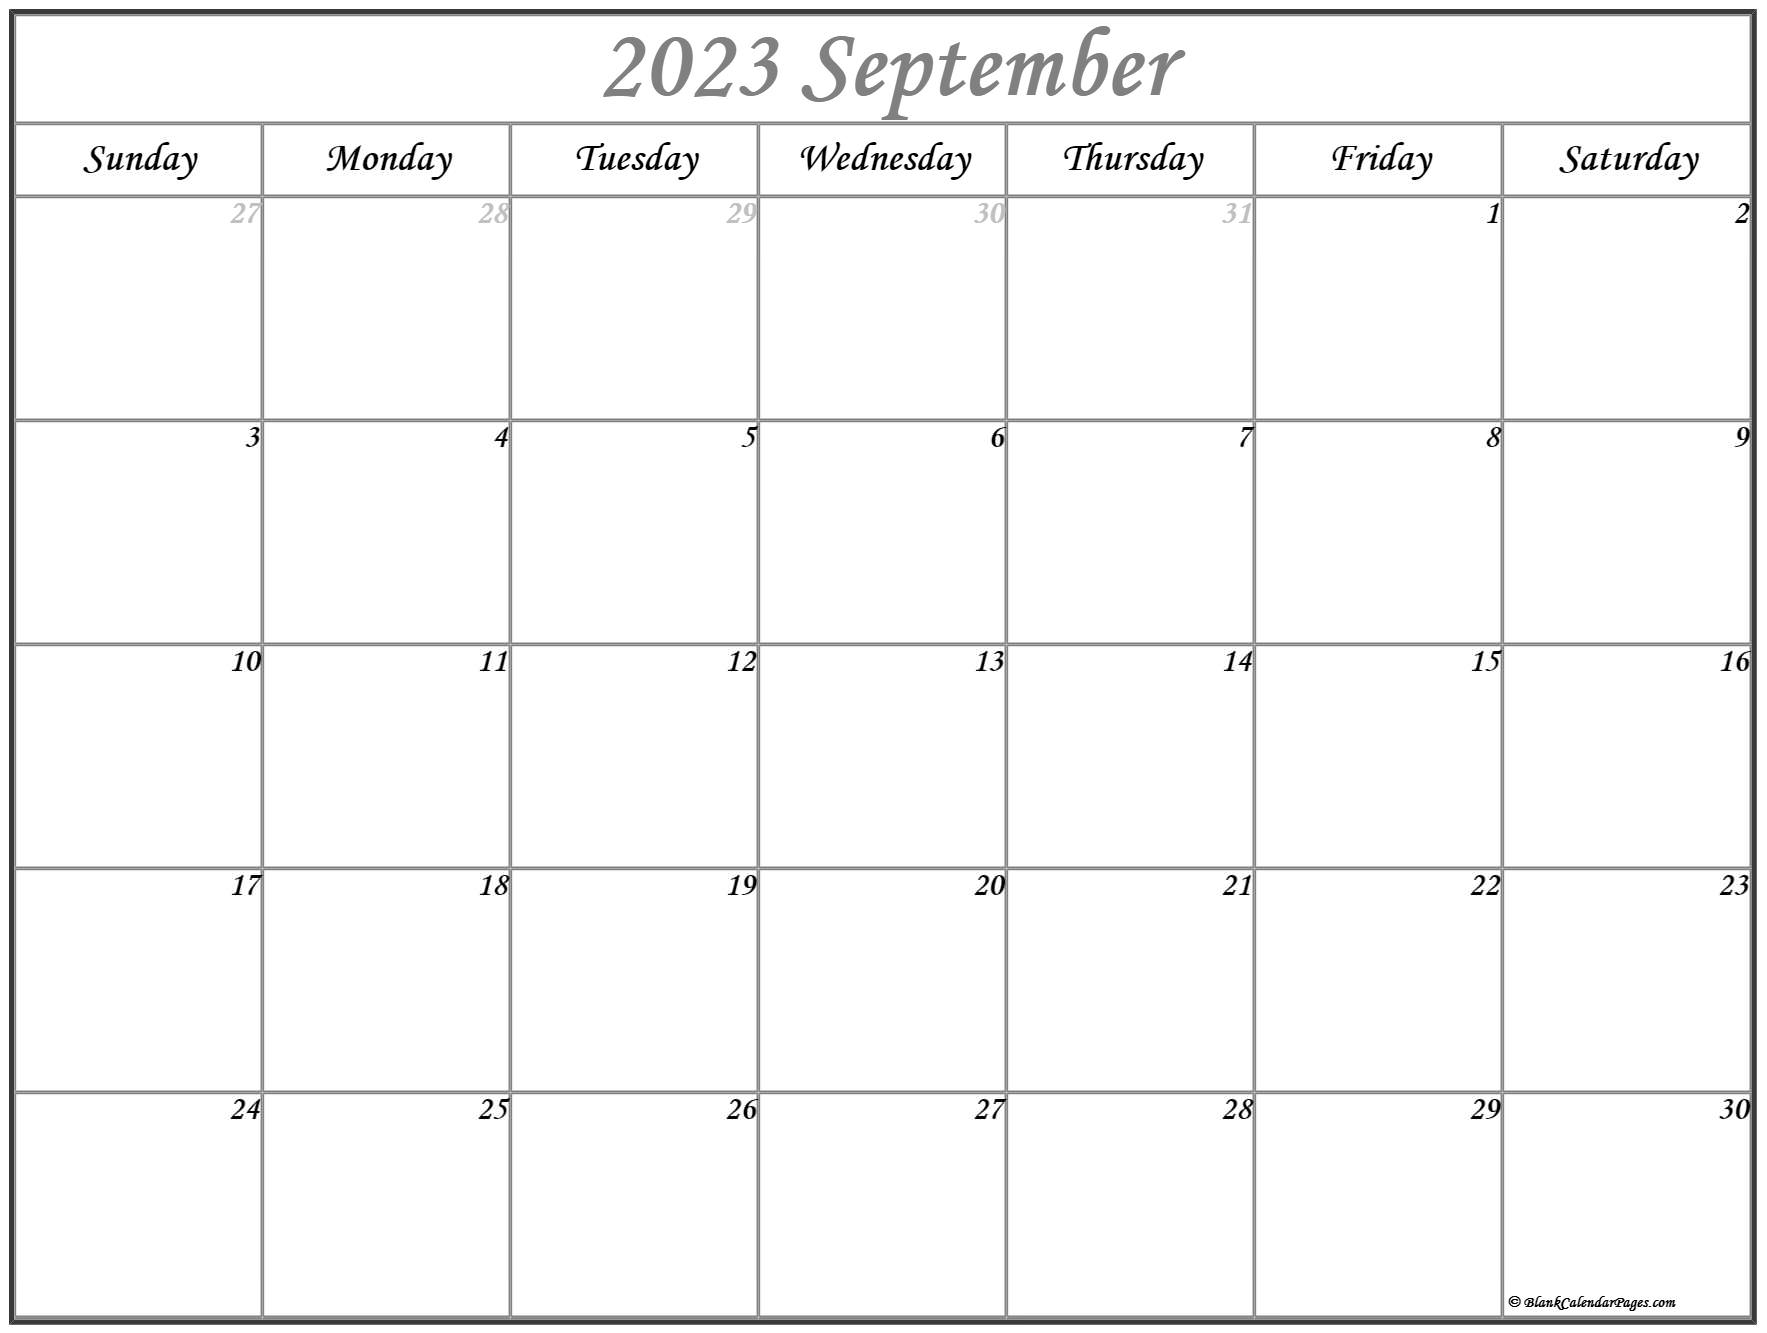 2023-september-calendars-handy-calendars-photos